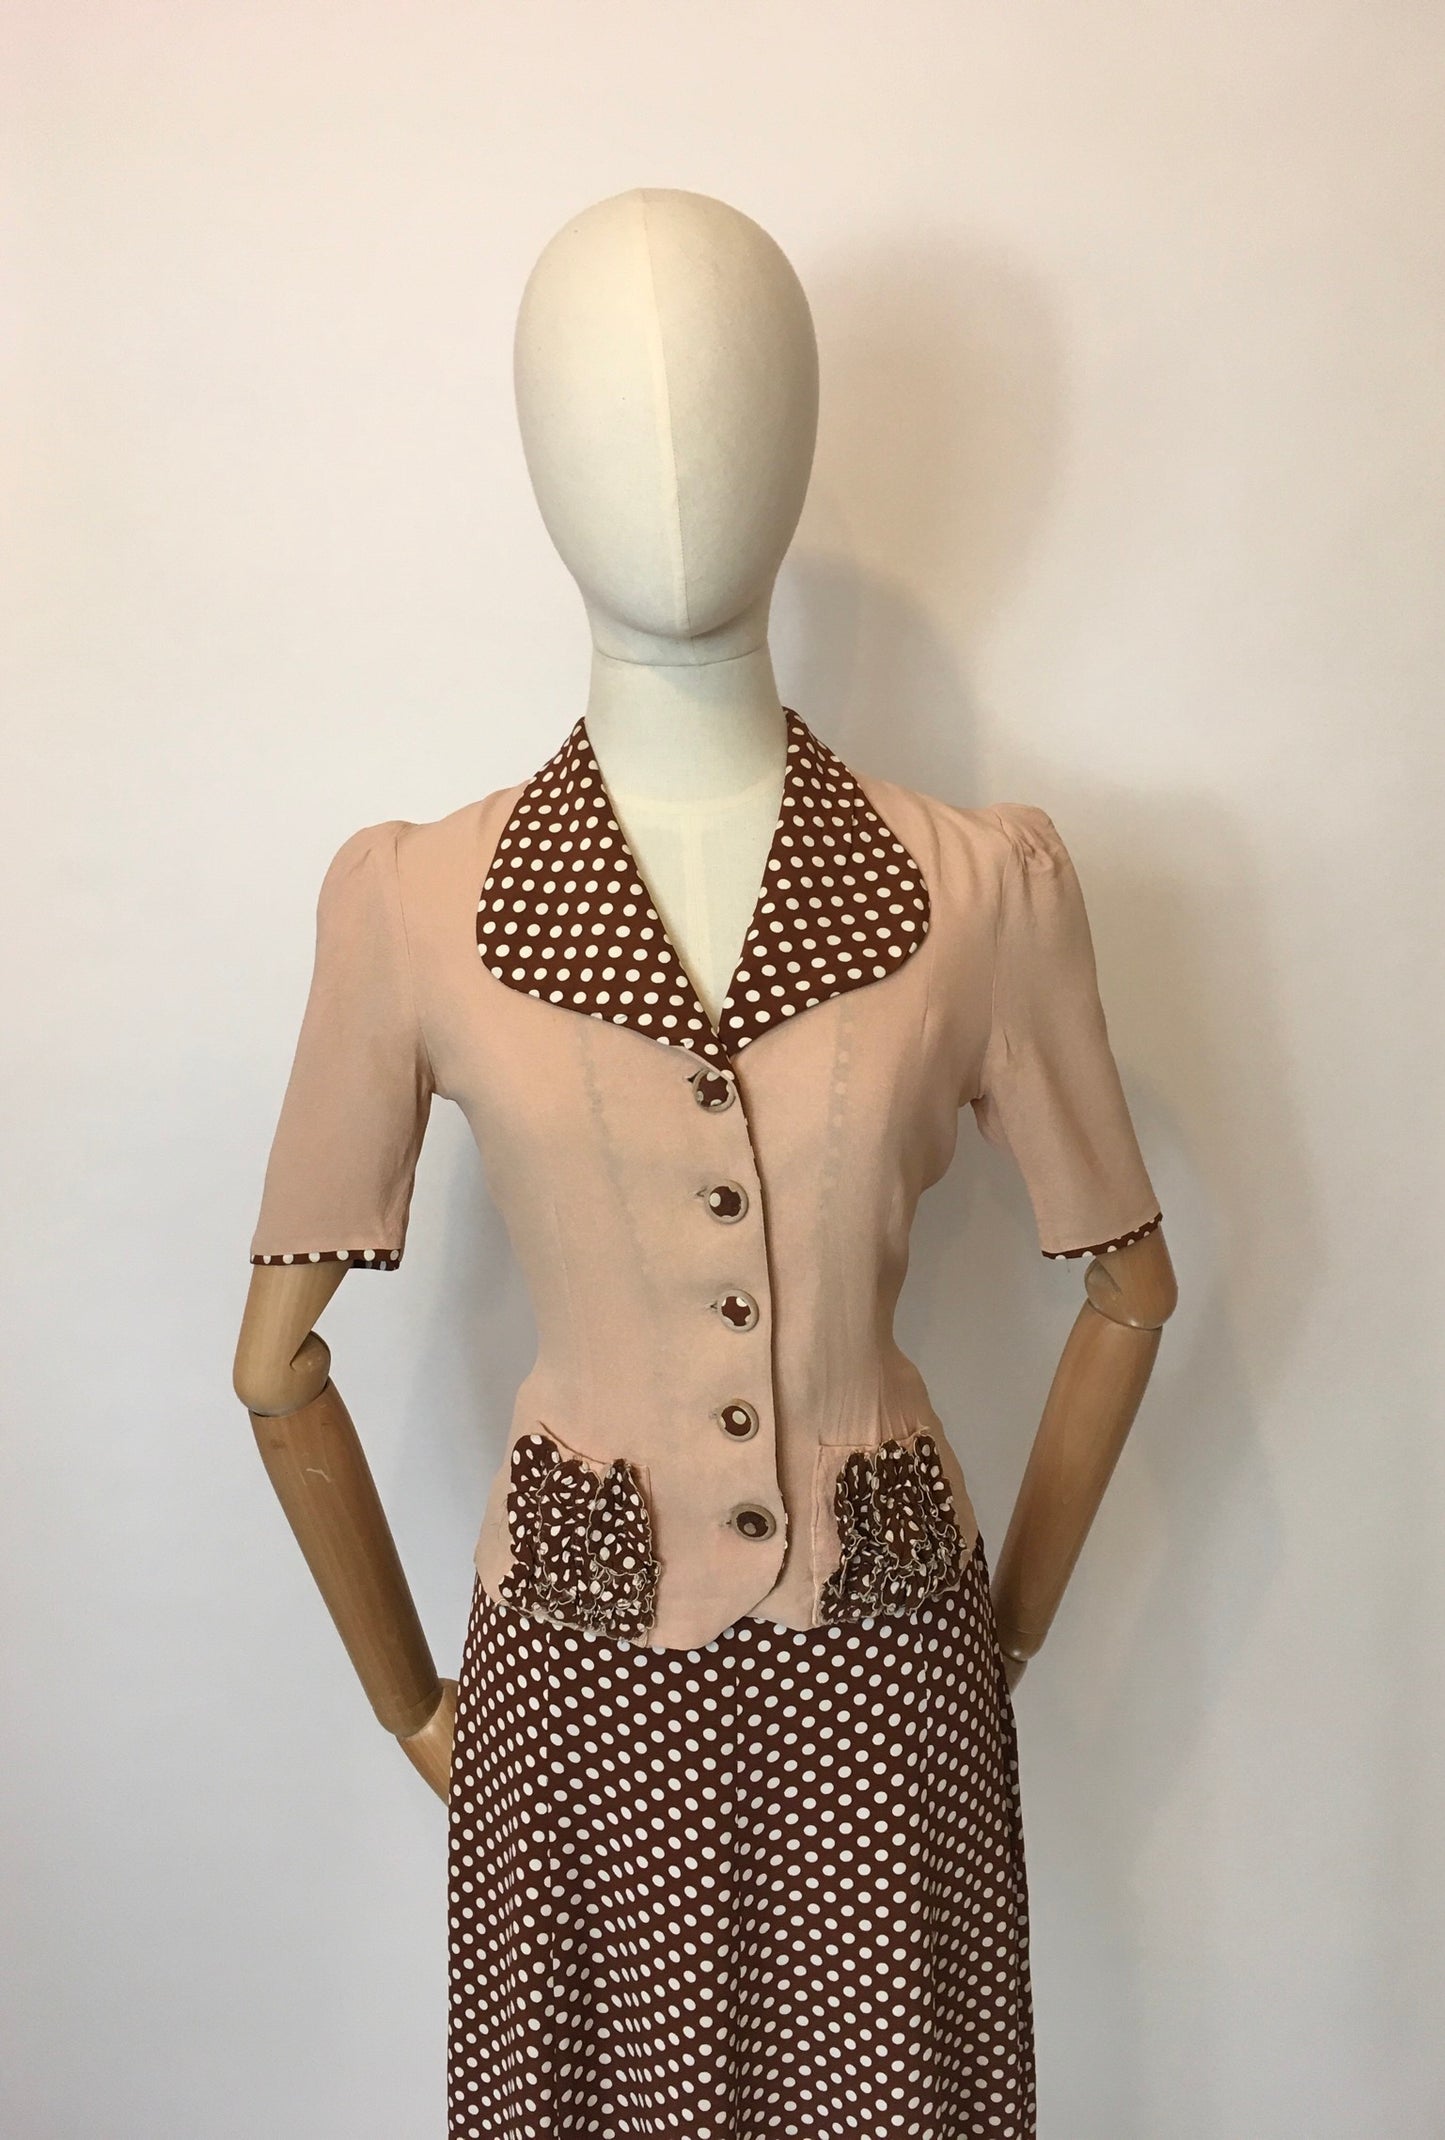 Original 1940’s Darling 2 pc Crepe Suit - In the Most Beautiful Contrast Blush Pink & Brown Polka Dot Crepe